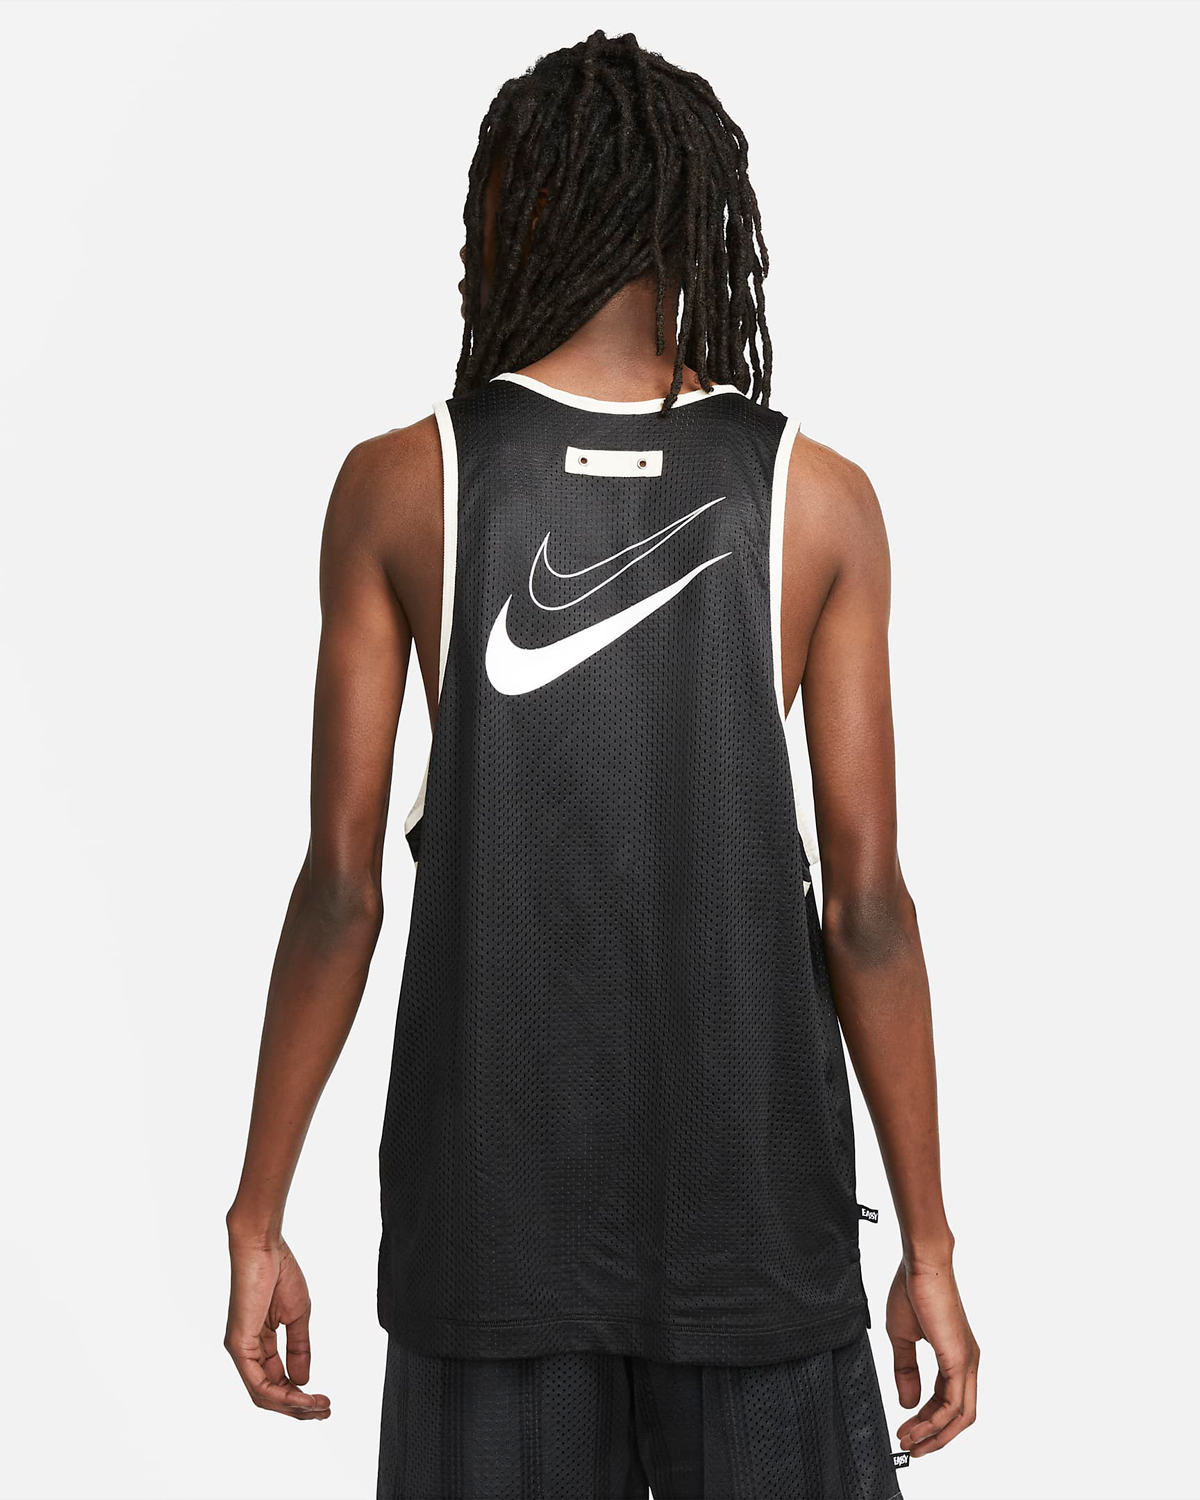 Nike-KD-Kevin-Durant-Mesh-Basketball-Jersey-Black-2